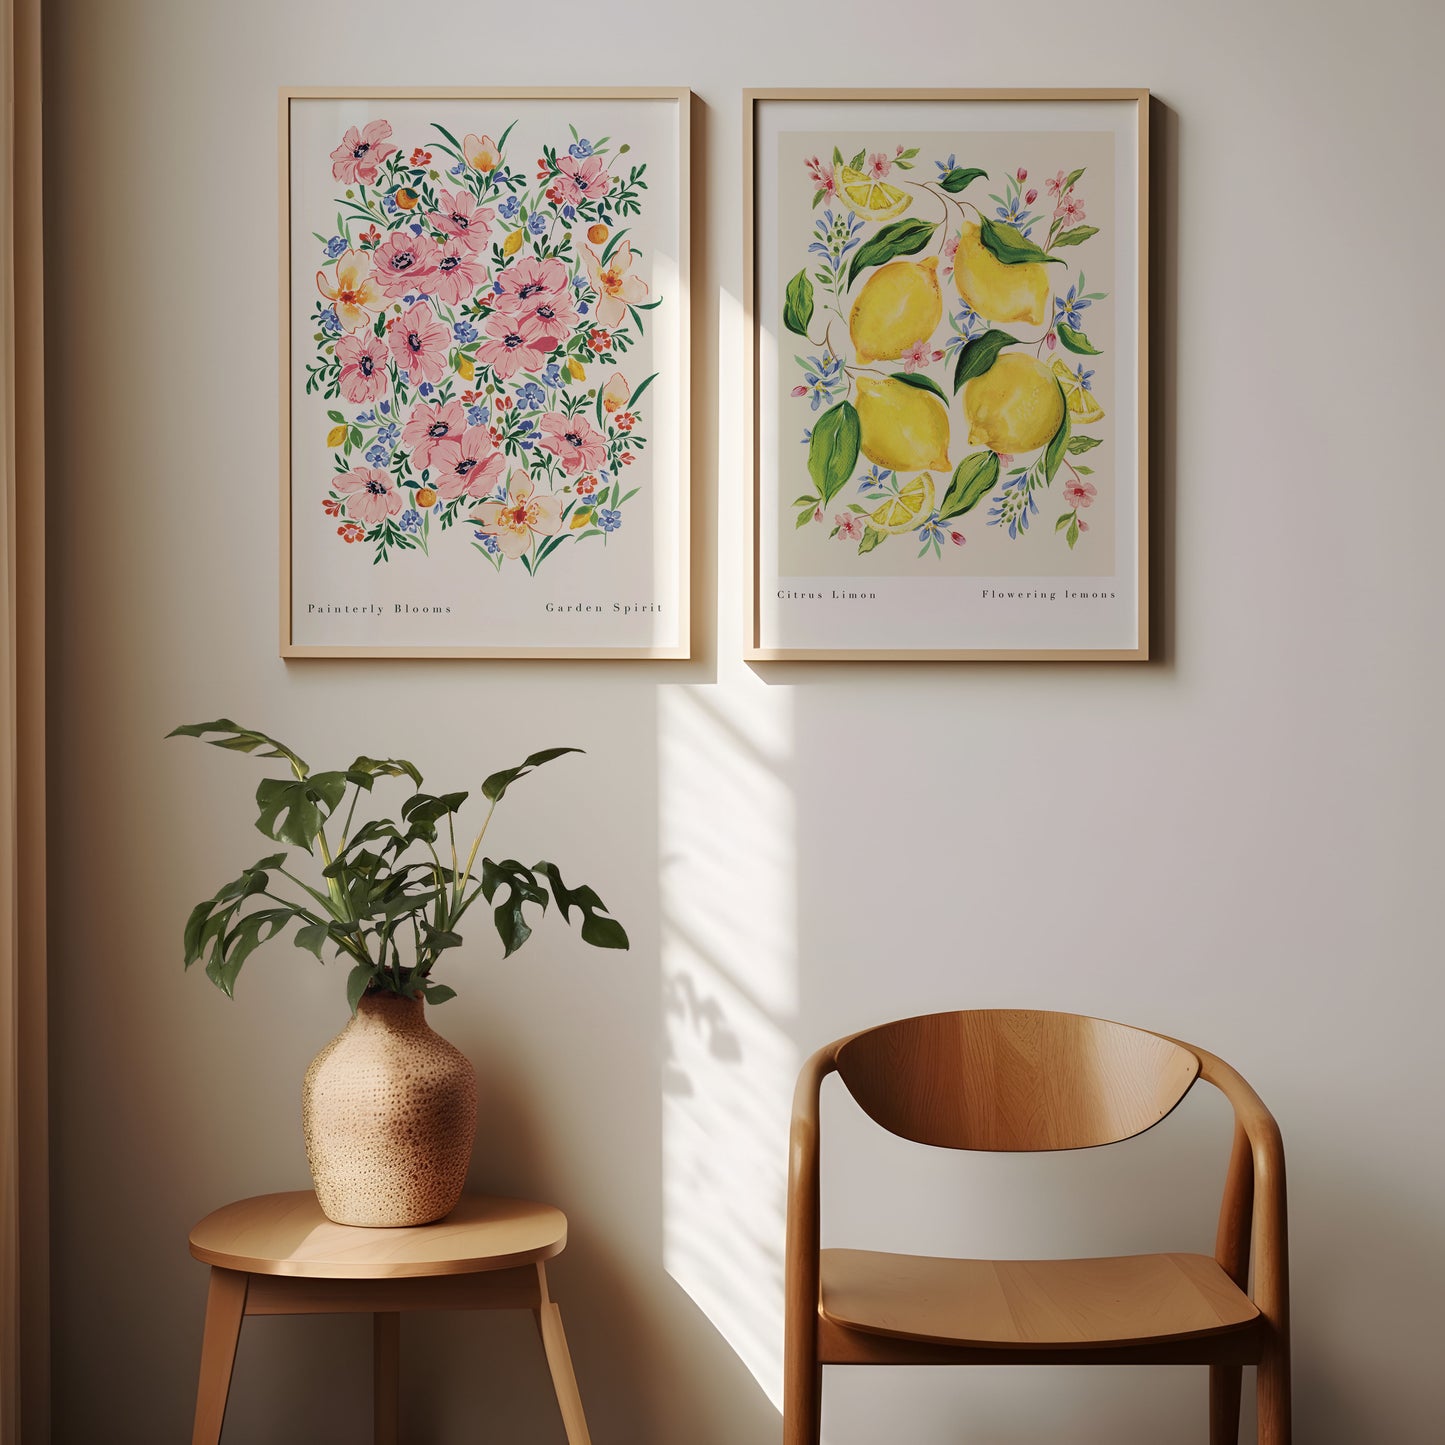 Painterly Blooms Art Print